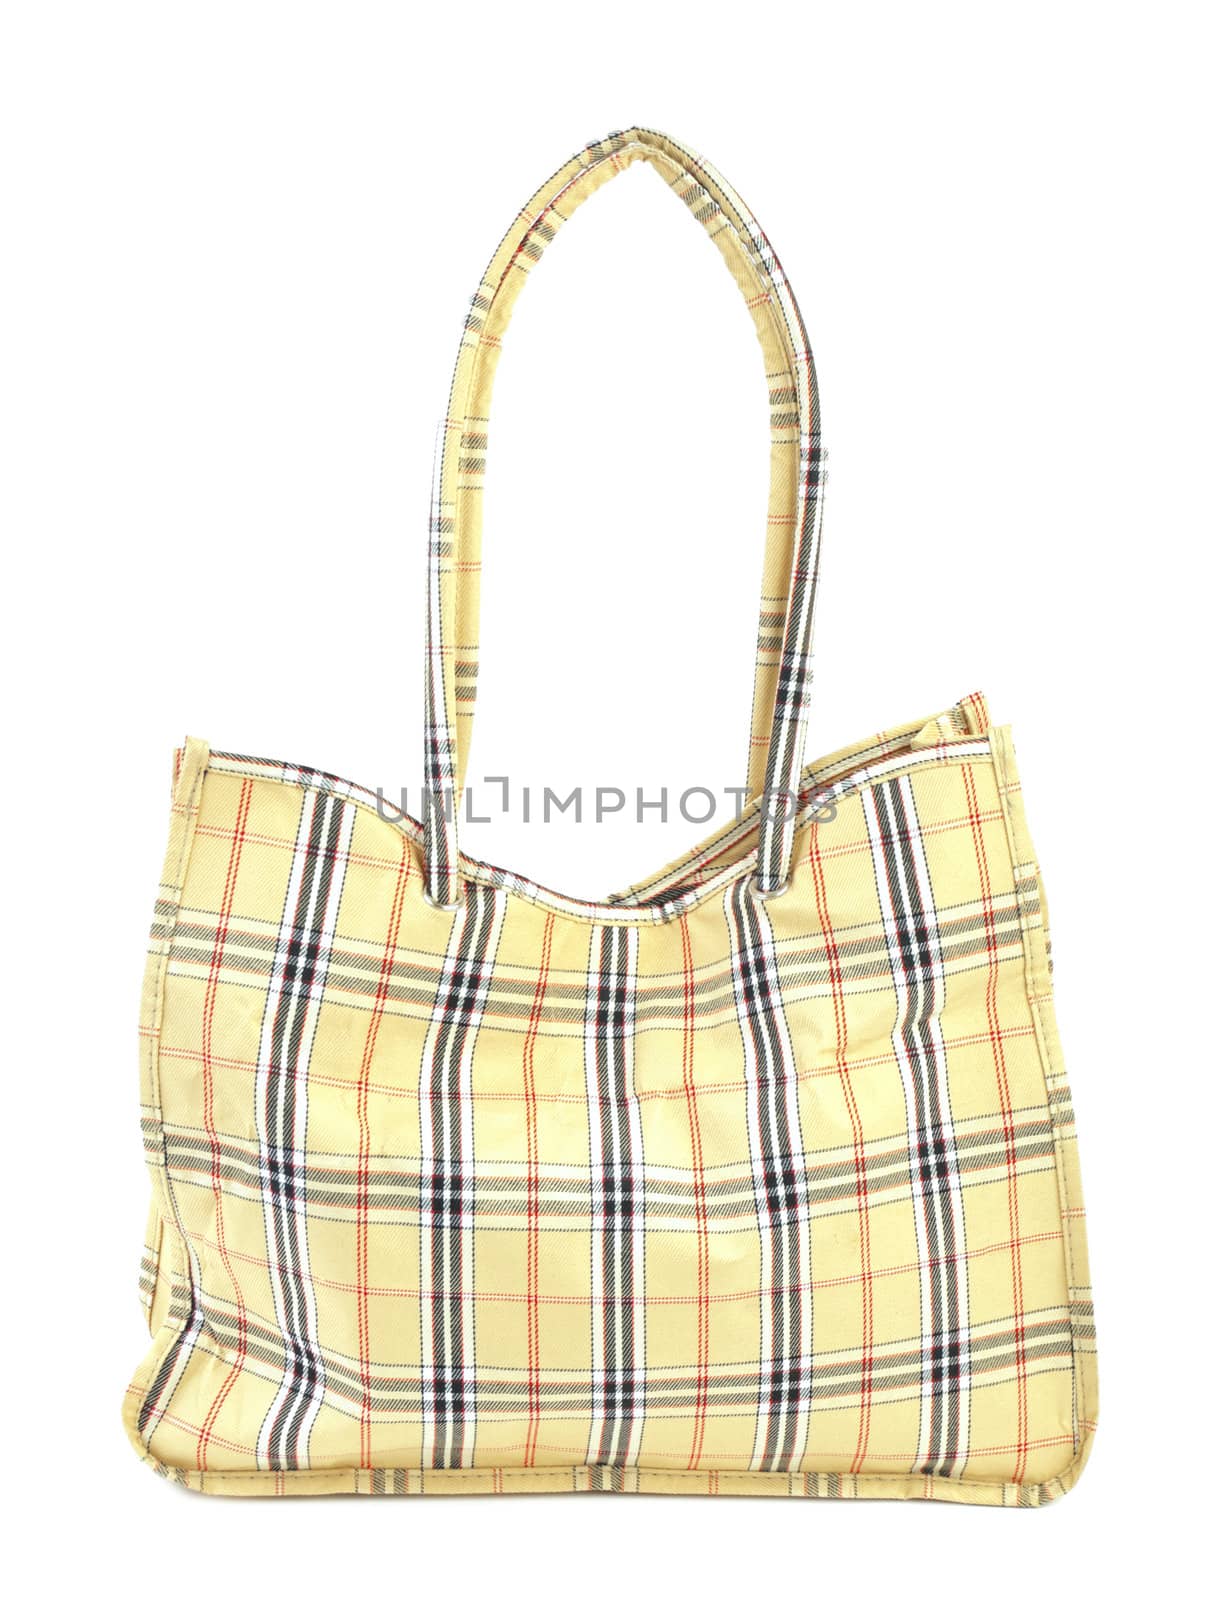 Yellow shopping bag. Isolated on white background.